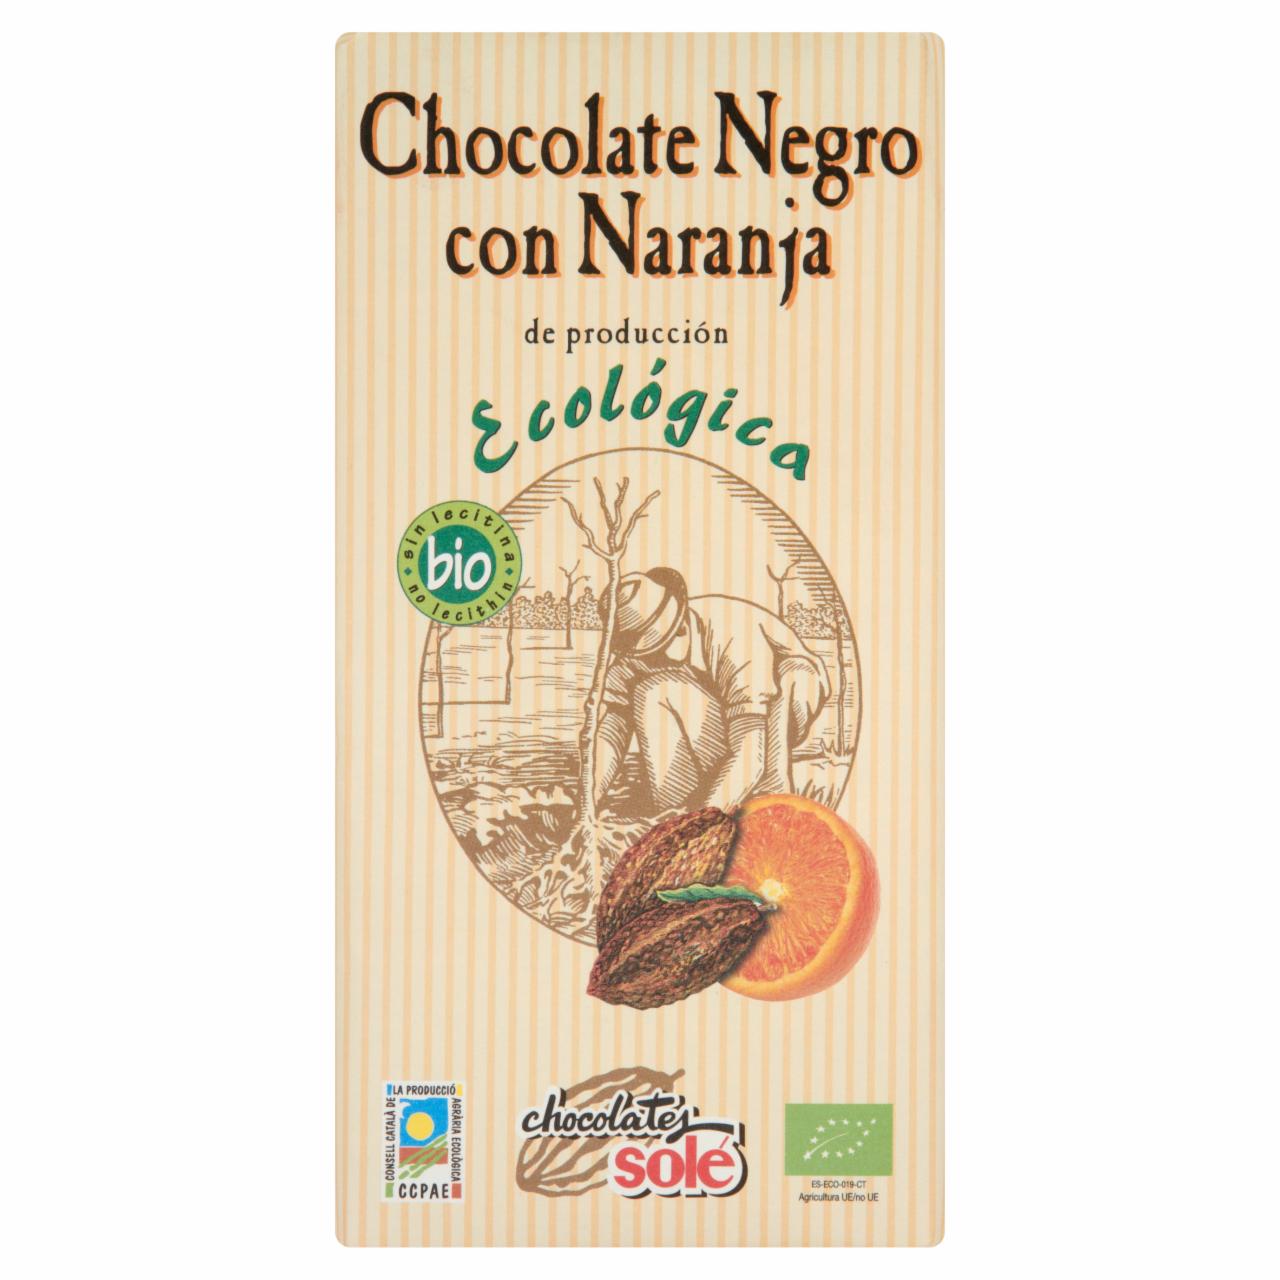 Fotografie - Chocolate puro 56% cocoa with orange narancha Chocolates solé